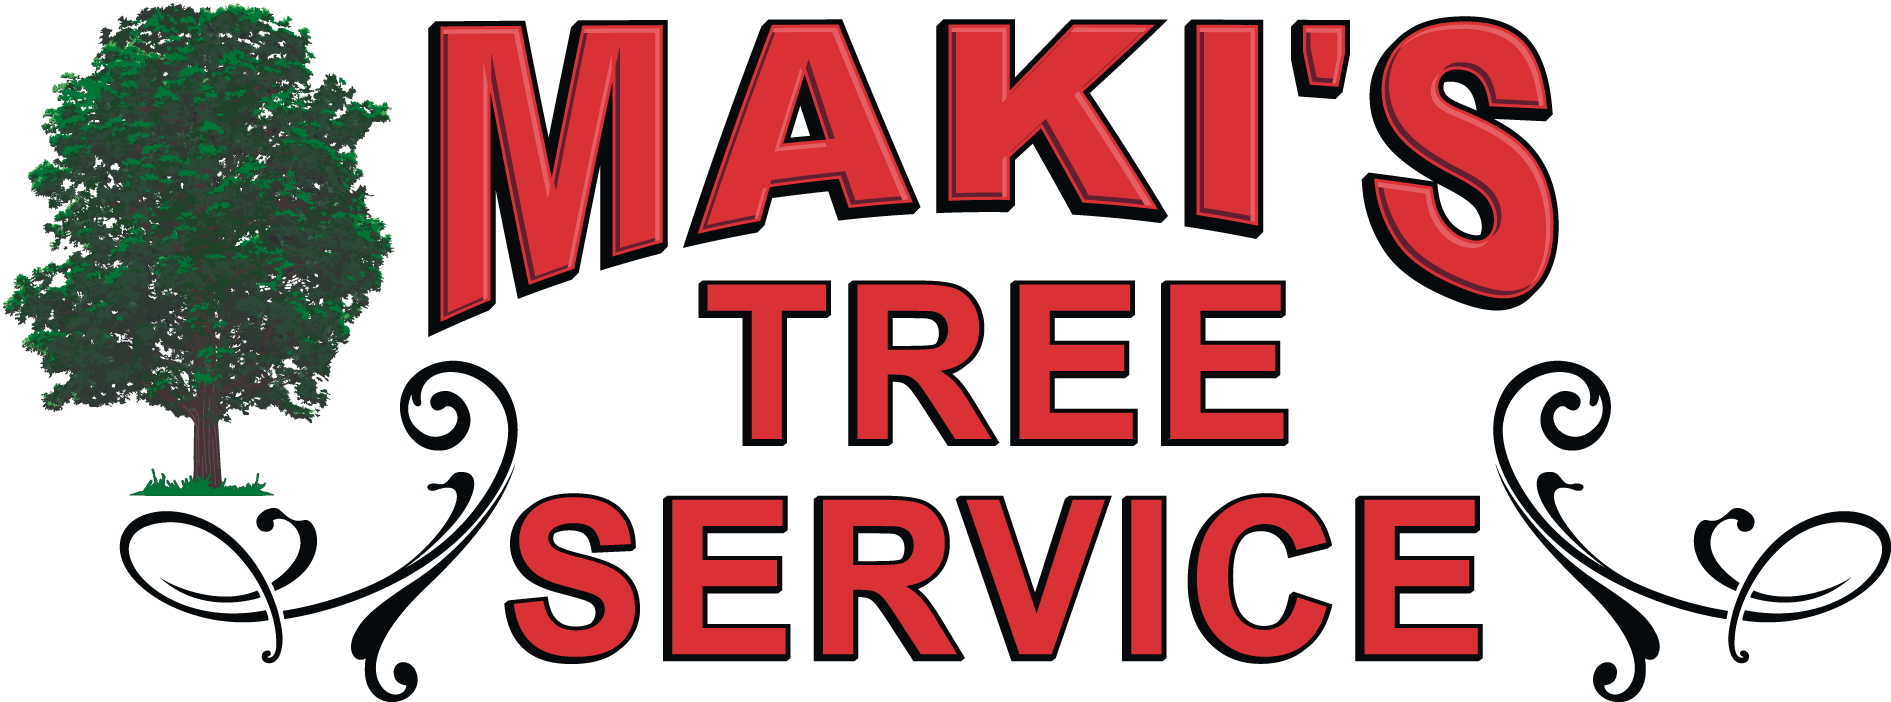 Maki's Tree Services LLC